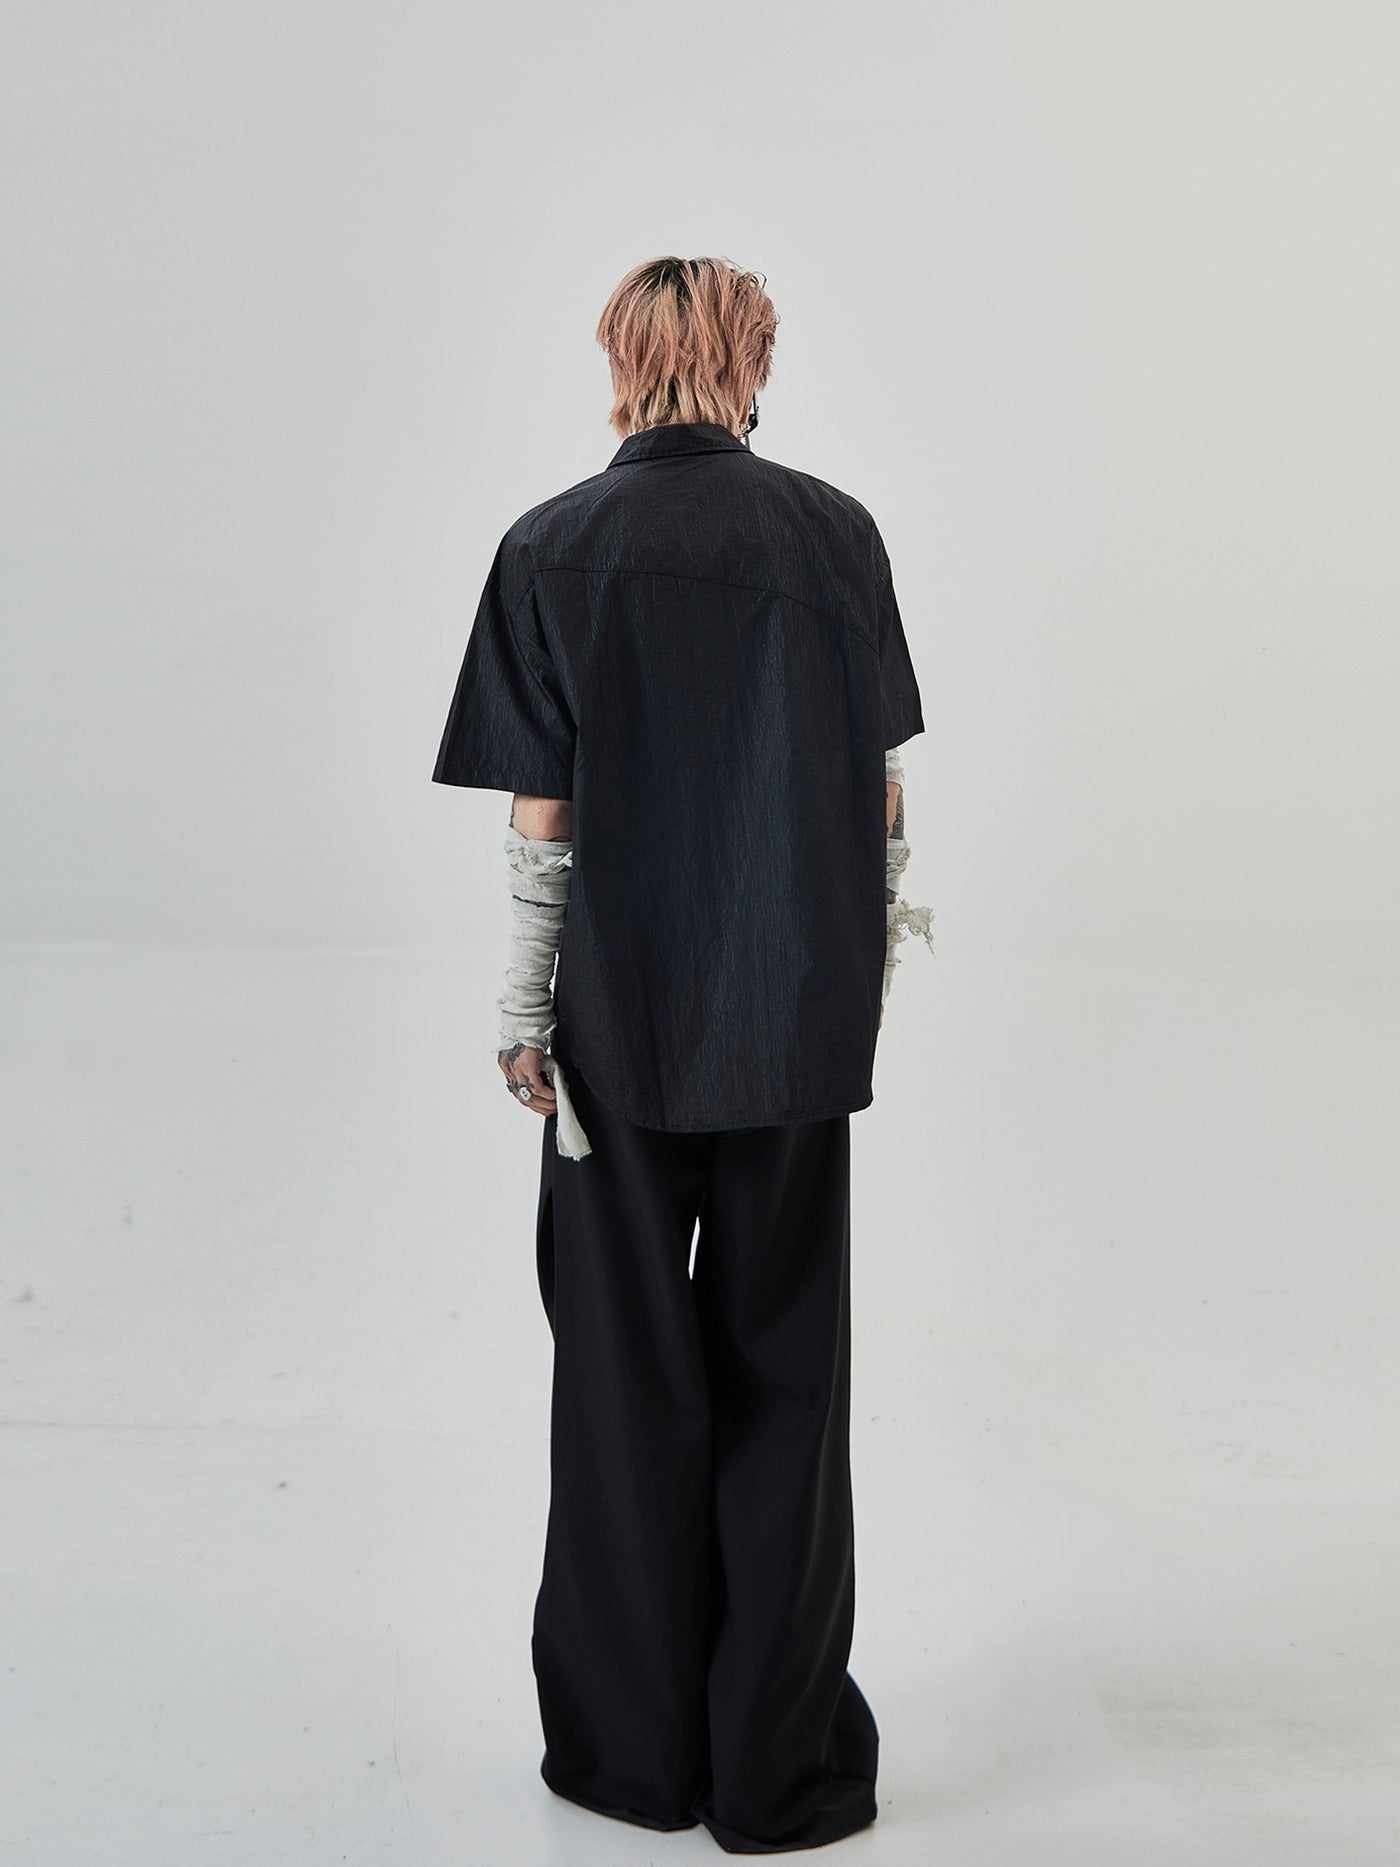 Textured and Zippered Shirt Korean Street Fashion Shirt By Ash Dark Shop Online at OH Vault